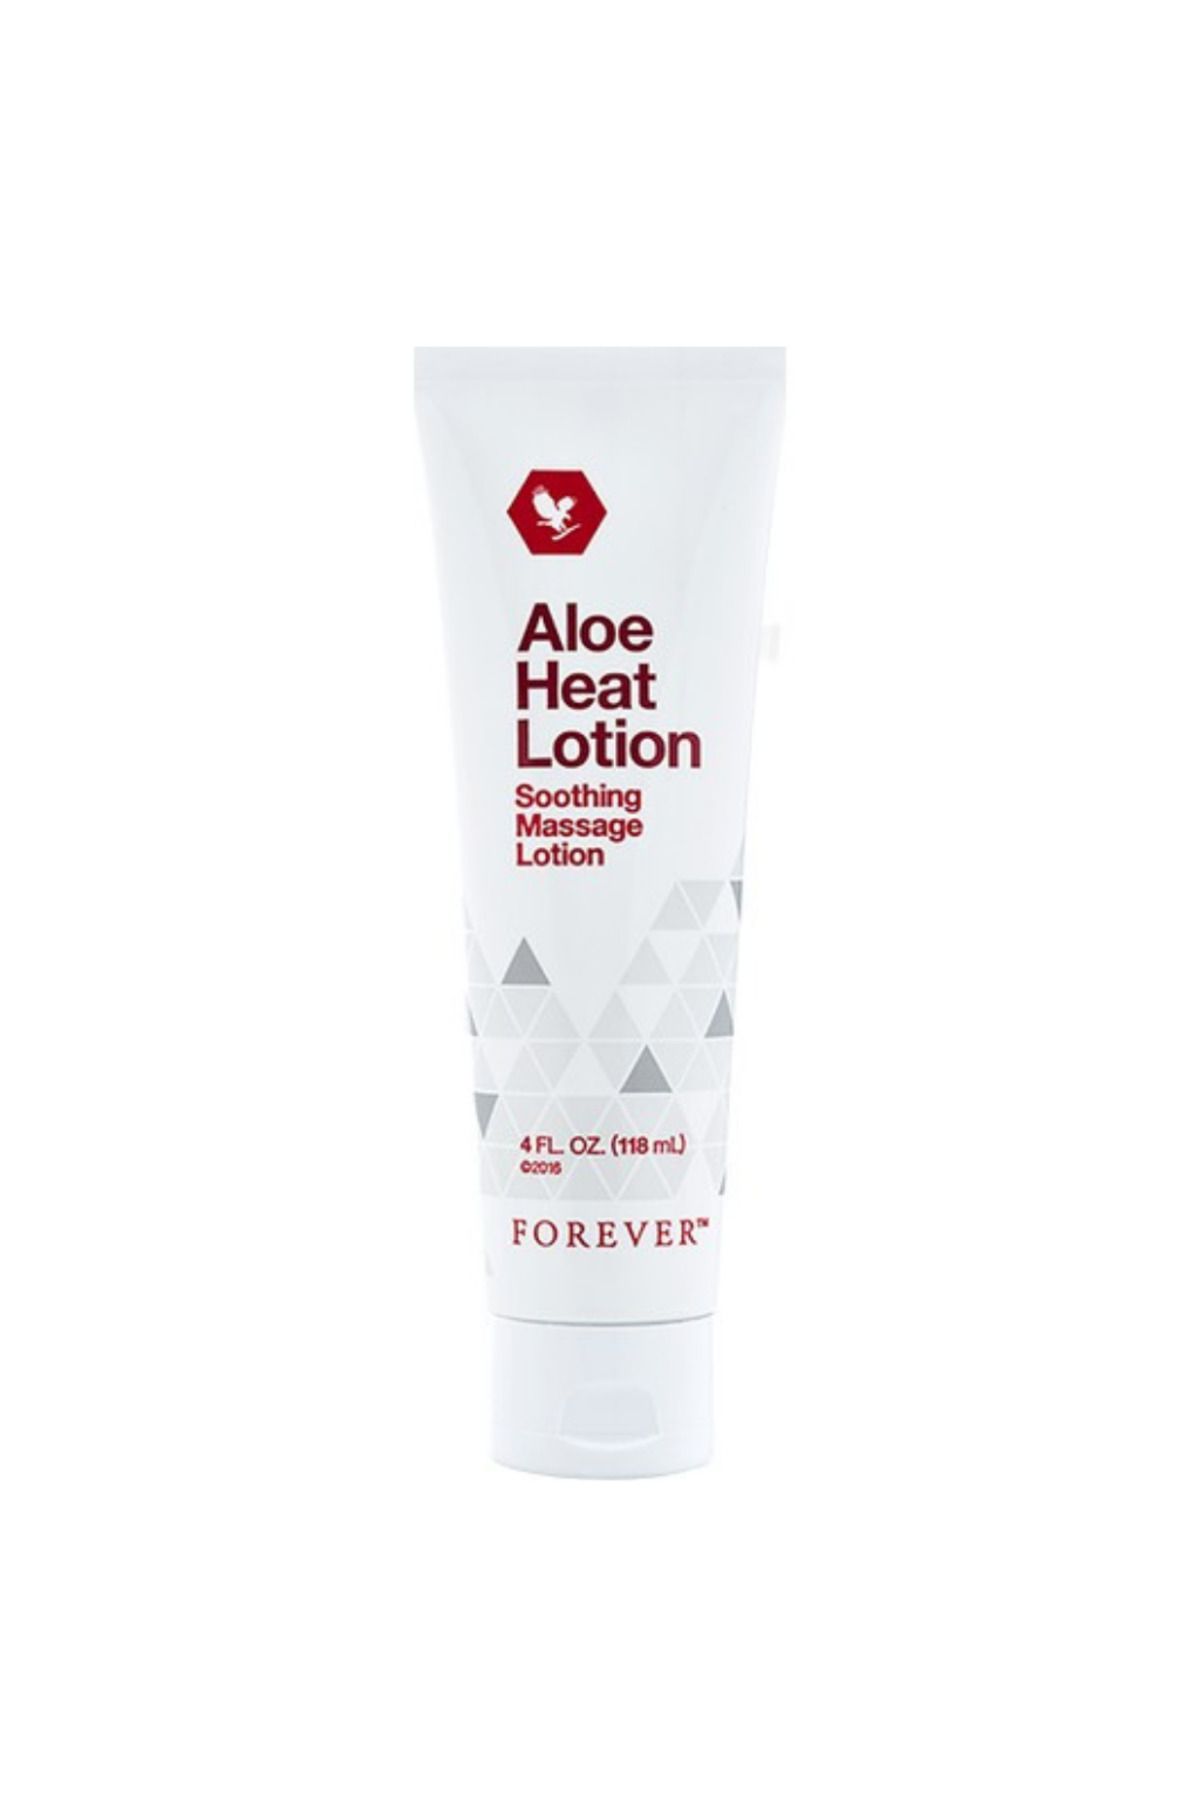 Forever Aloe Heat Lotion - Forever Living Aloe Heat Lotion